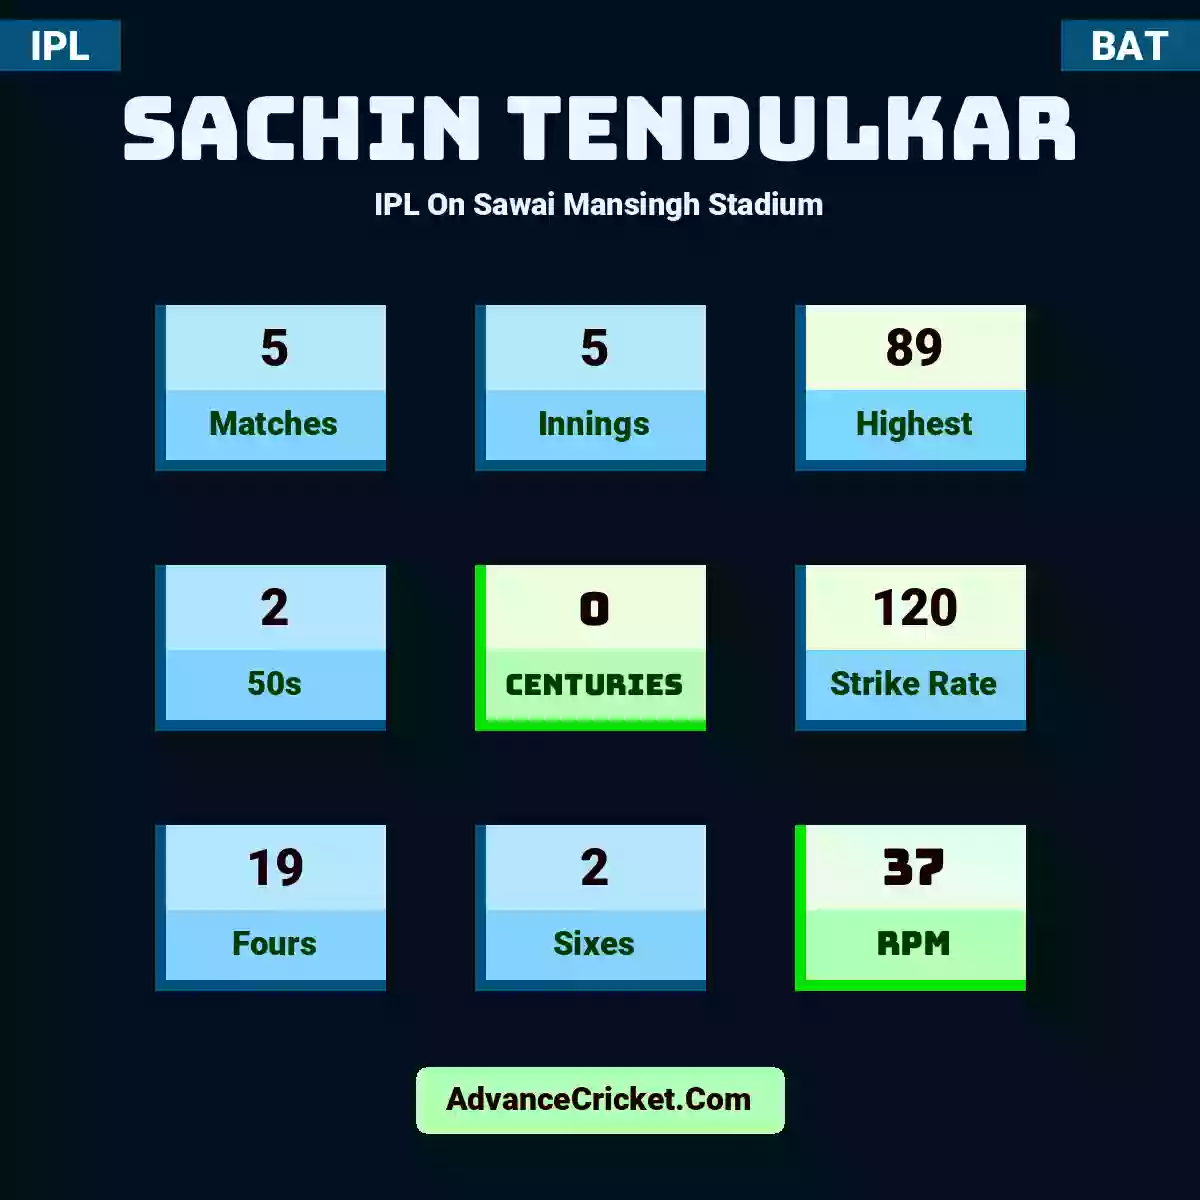 Sachin Tendulkar IPL  On Sawai Mansingh Stadium, Sachin Tendulkar played 5 matches, scored 89 runs as highest, 2 half-centuries, and 0 centuries, with a strike rate of 120. S.Tendulkar hit 19 fours and 2 sixes, with an RPM of 37.